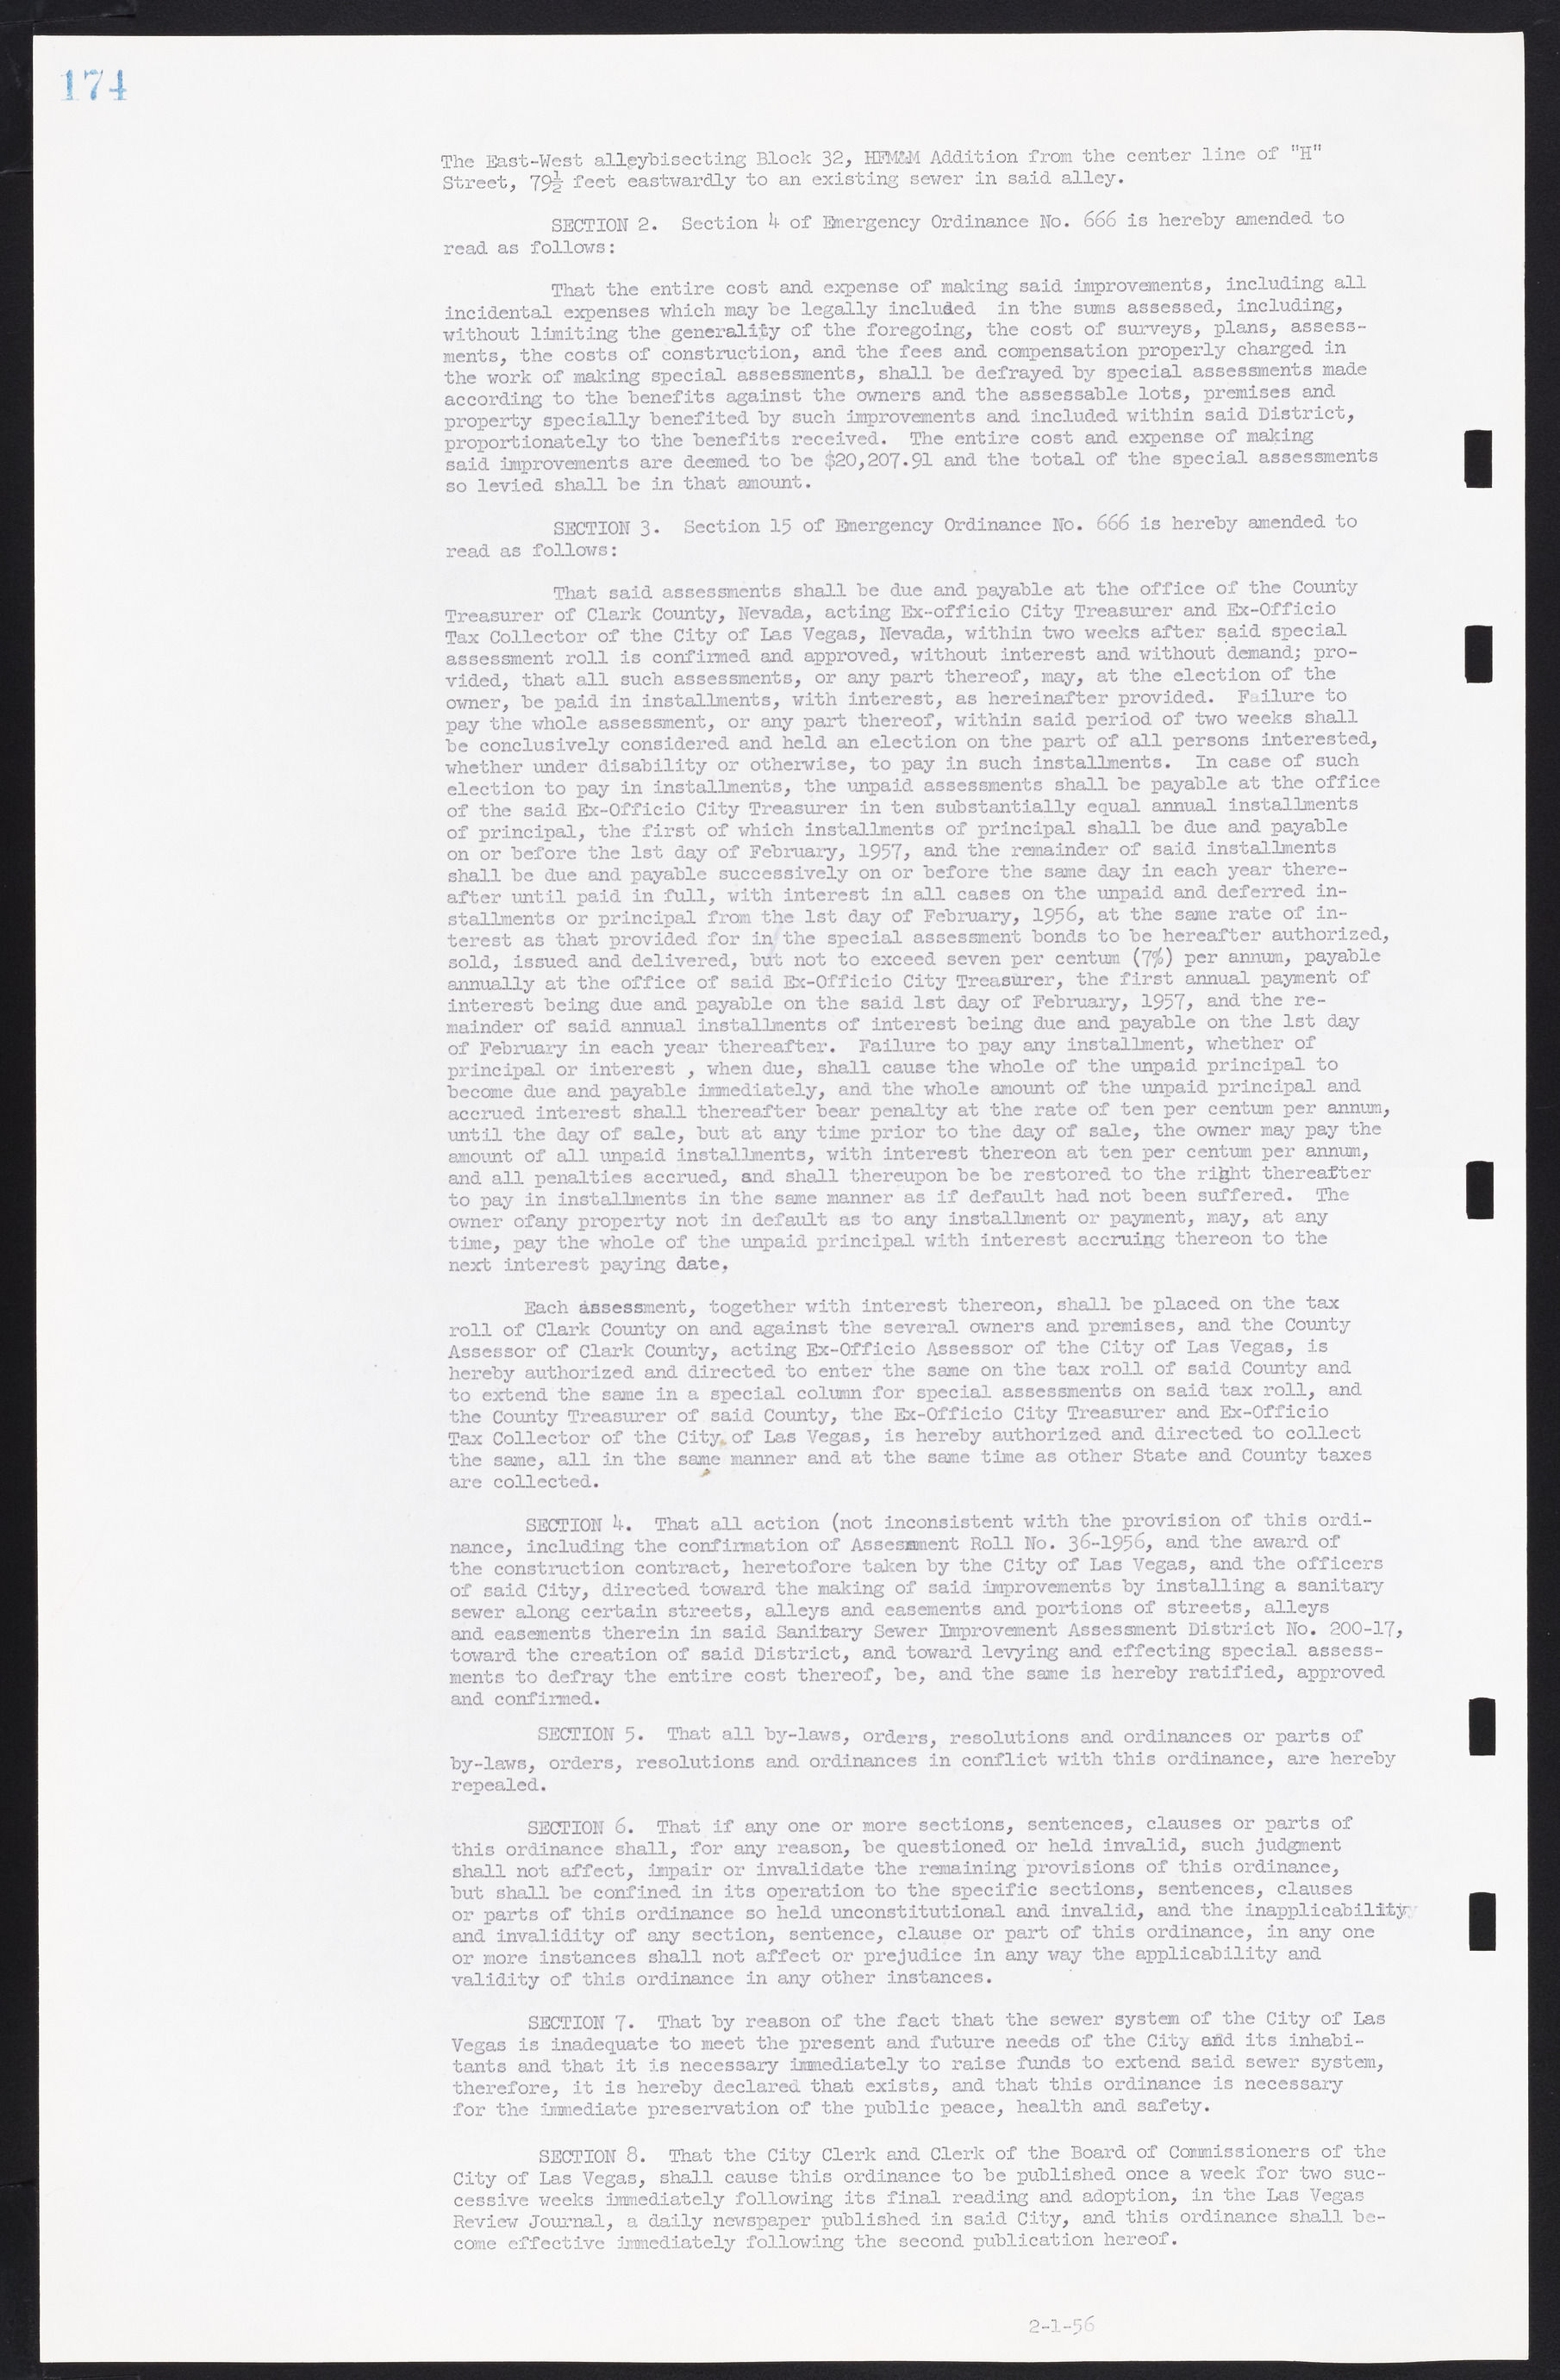 Las Vegas City Commission Minutes, September 21, 1955 to November 20, 1957, lvc000010-190